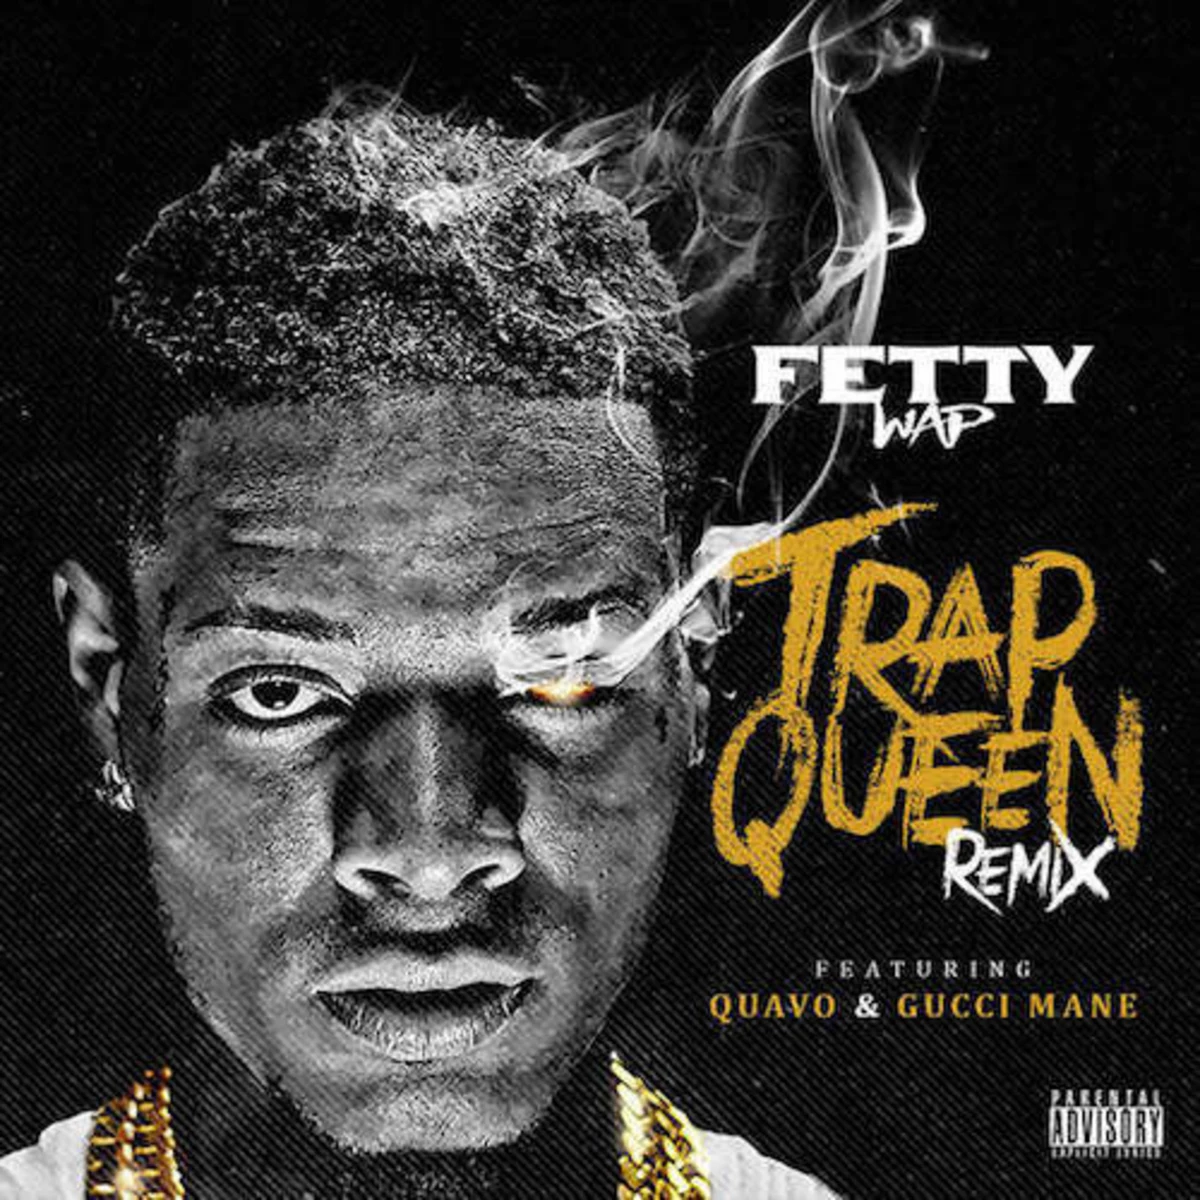 Listen to Fetty Wap Feat. Gucci Mane, Azealia Banks and Quavo, “Trap Queen ( Remix)” - XXL